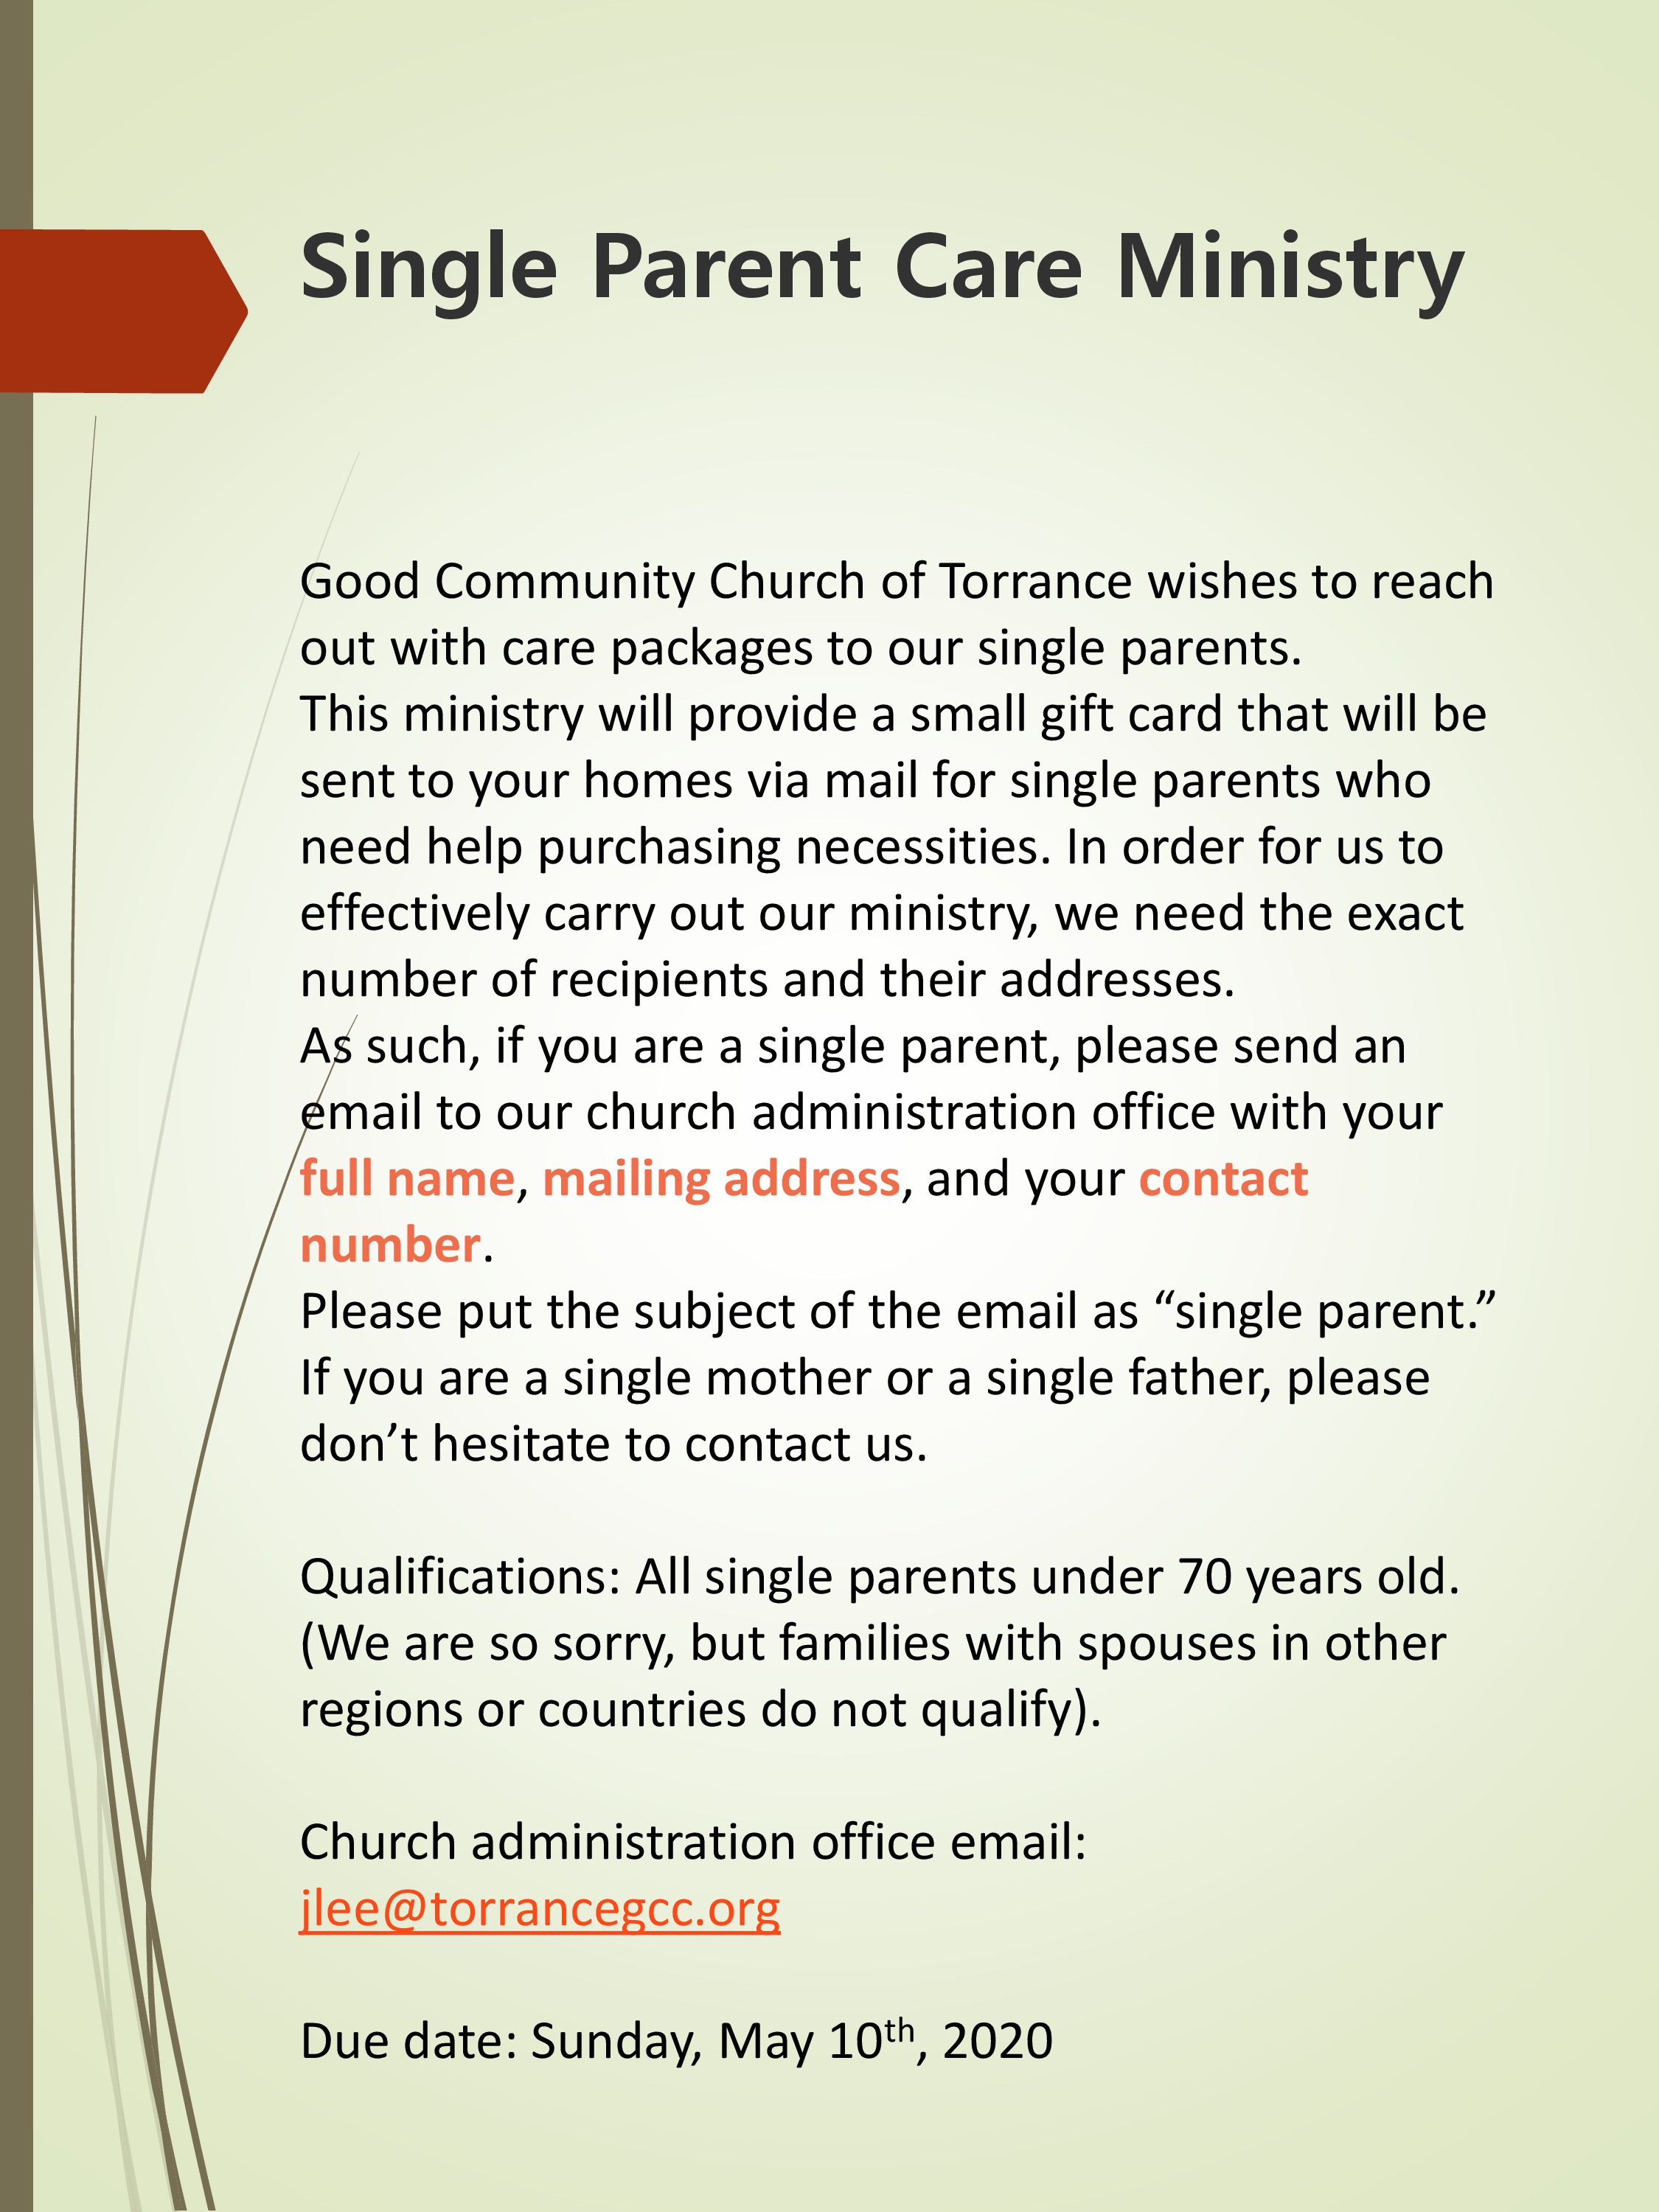 Single Parent Care Ministry.jpg